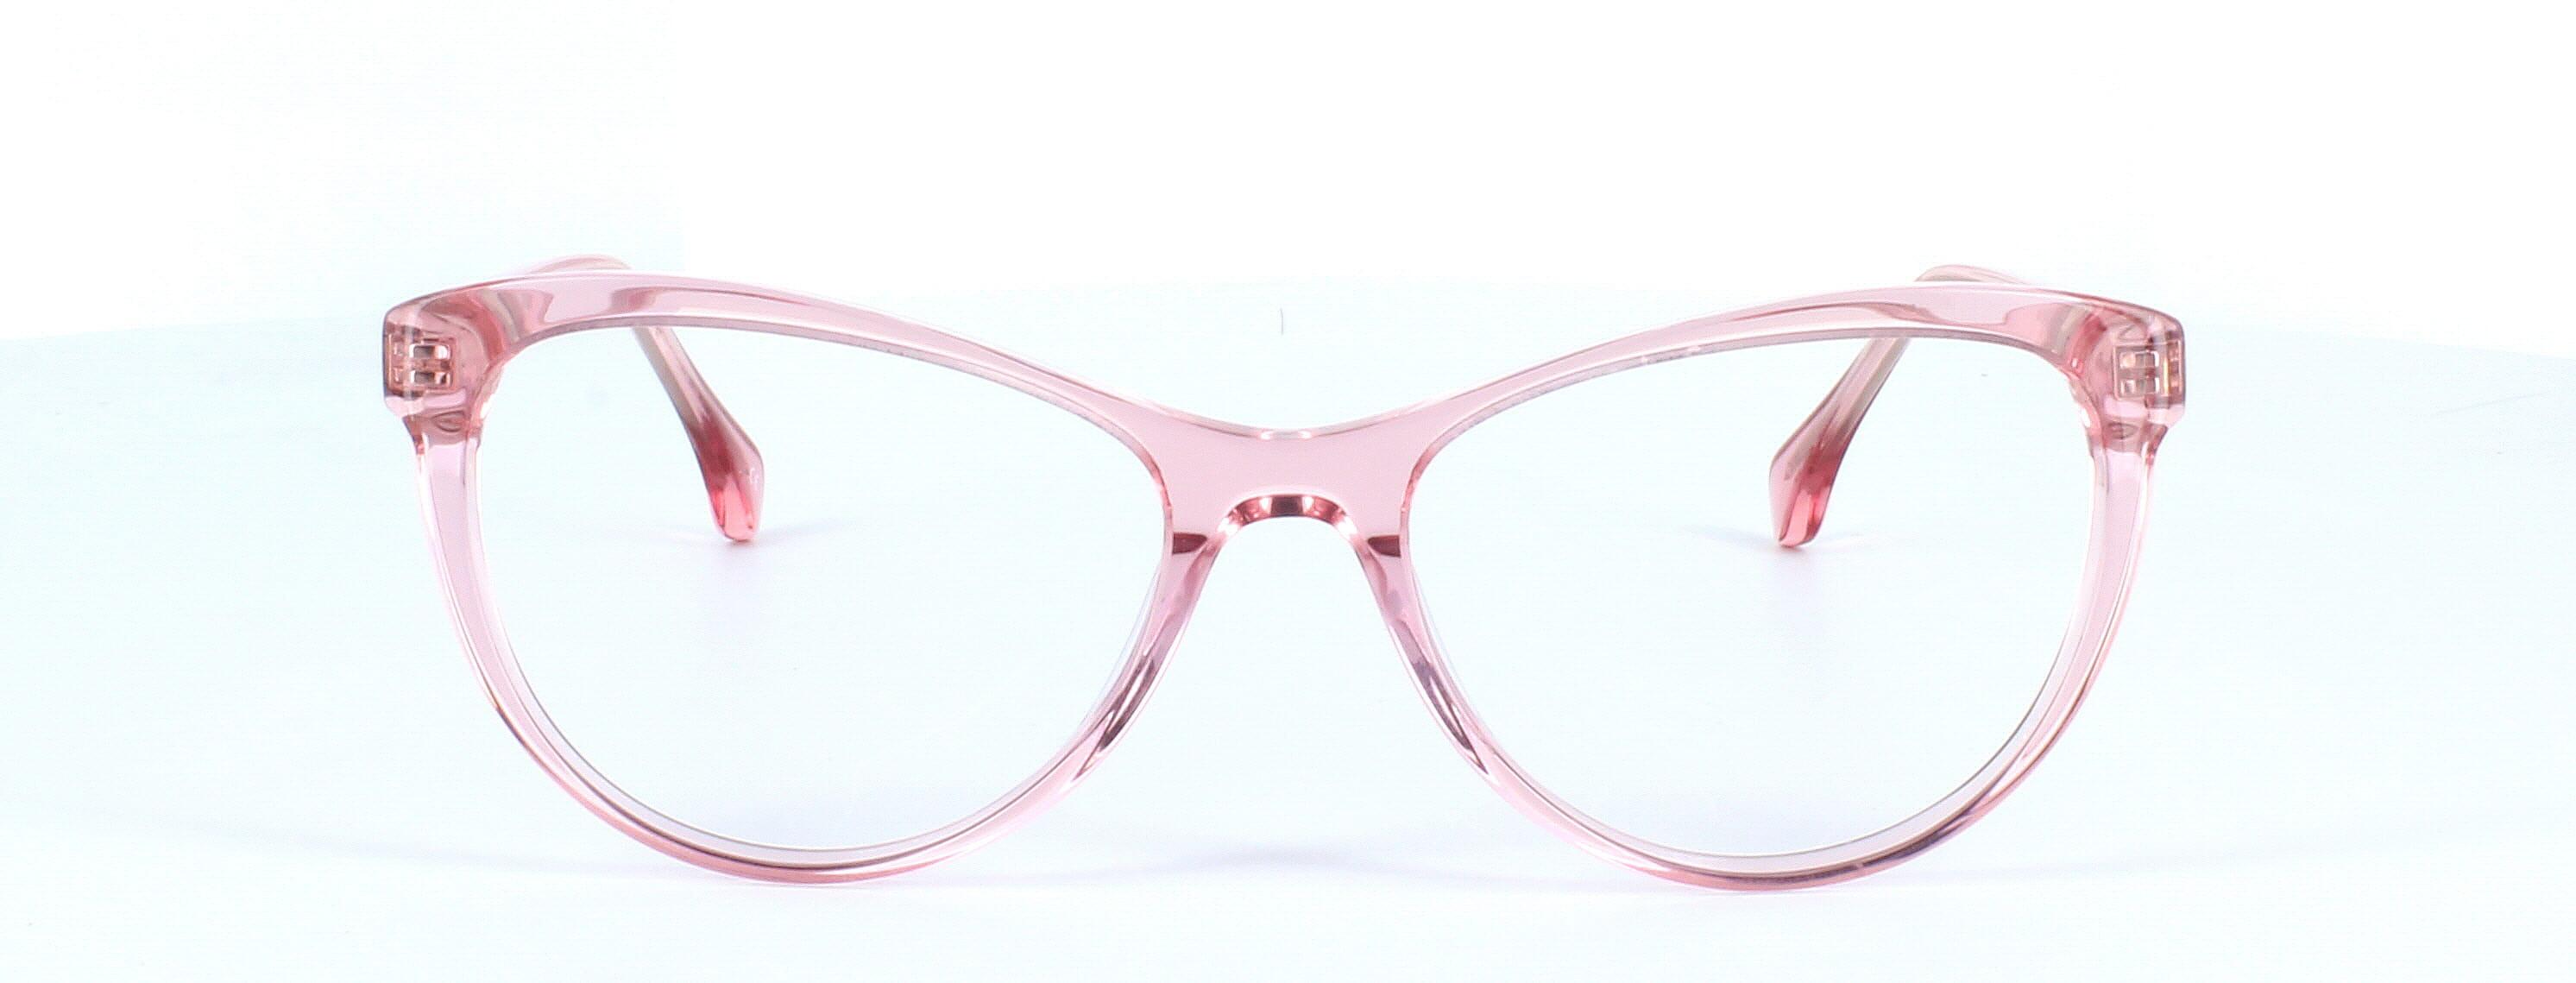 Hadlow - Ladies crystal pink cat eye shaped acetate glasses frame - image view 5